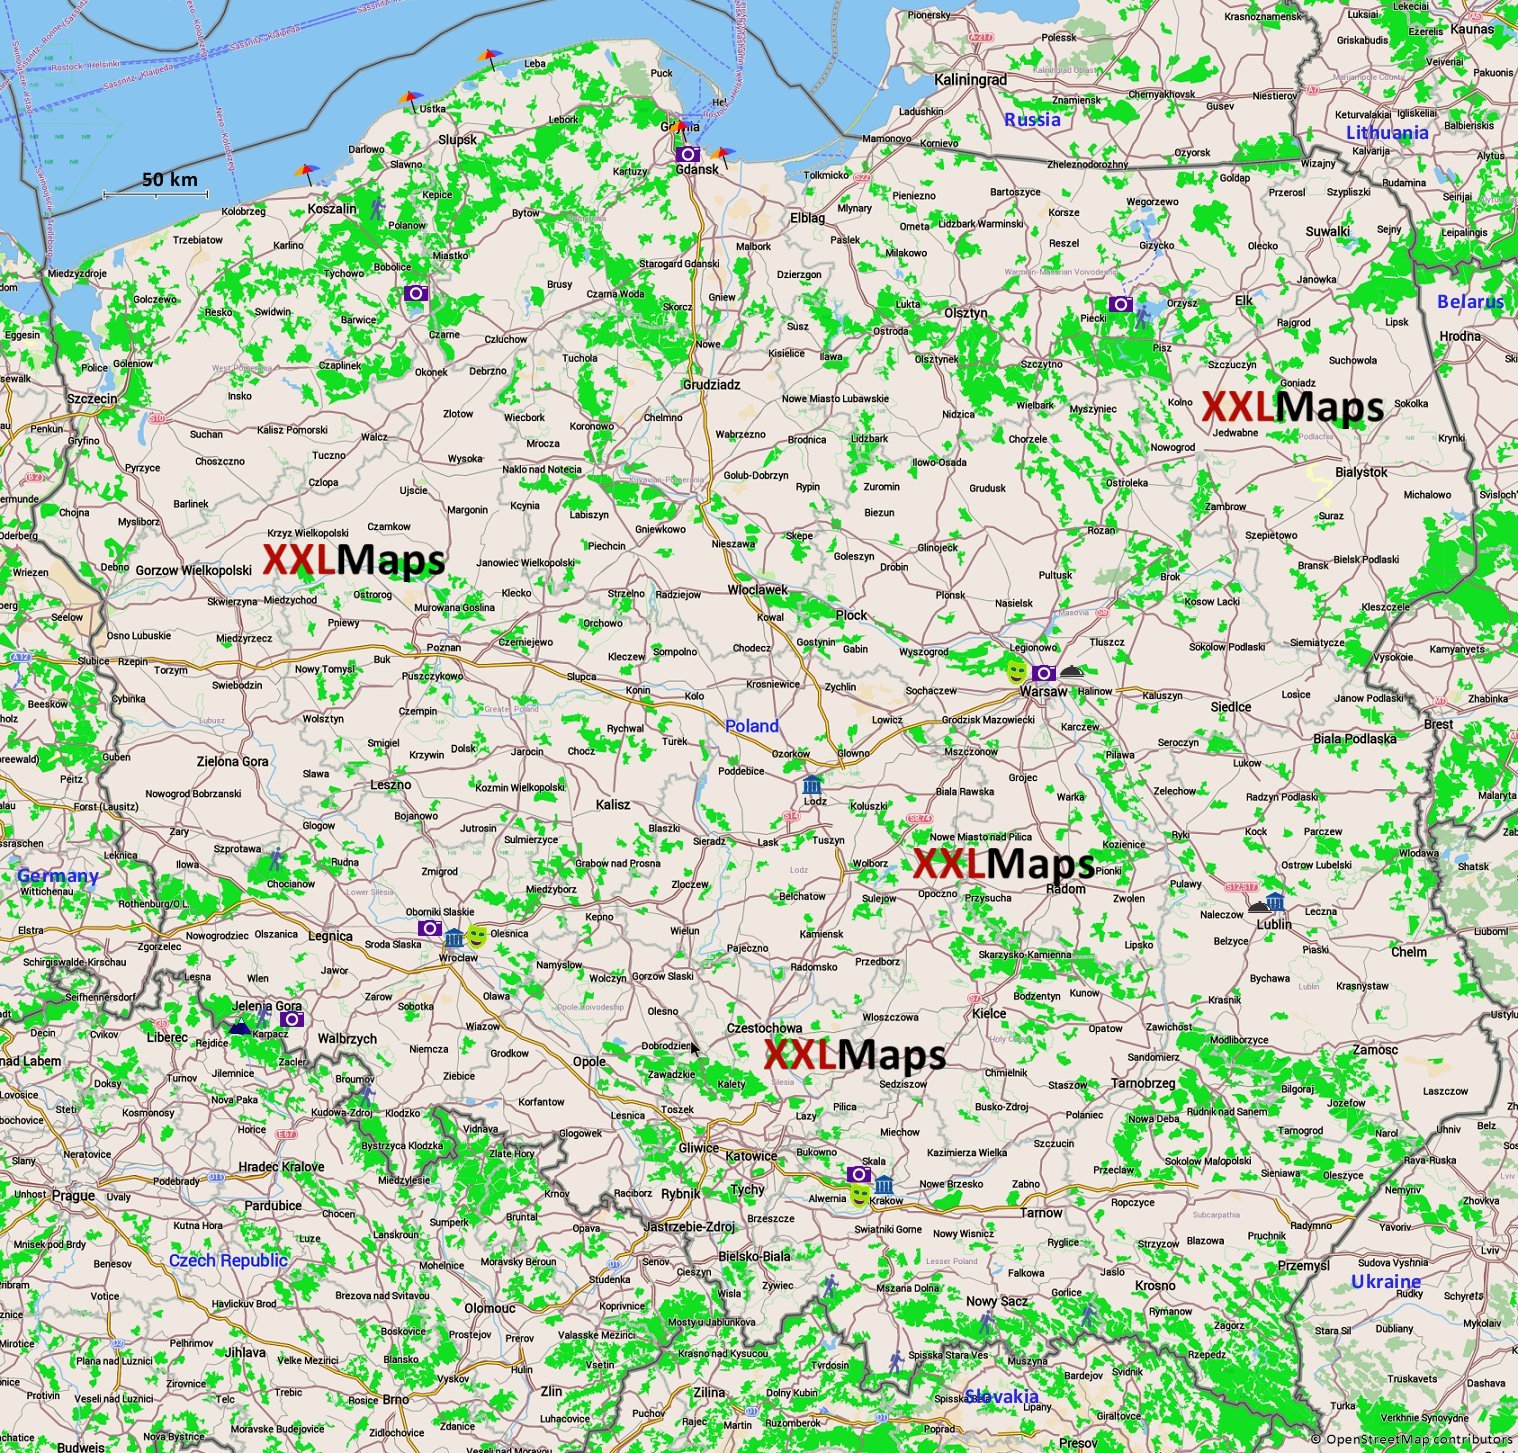 Turist kart over Polen